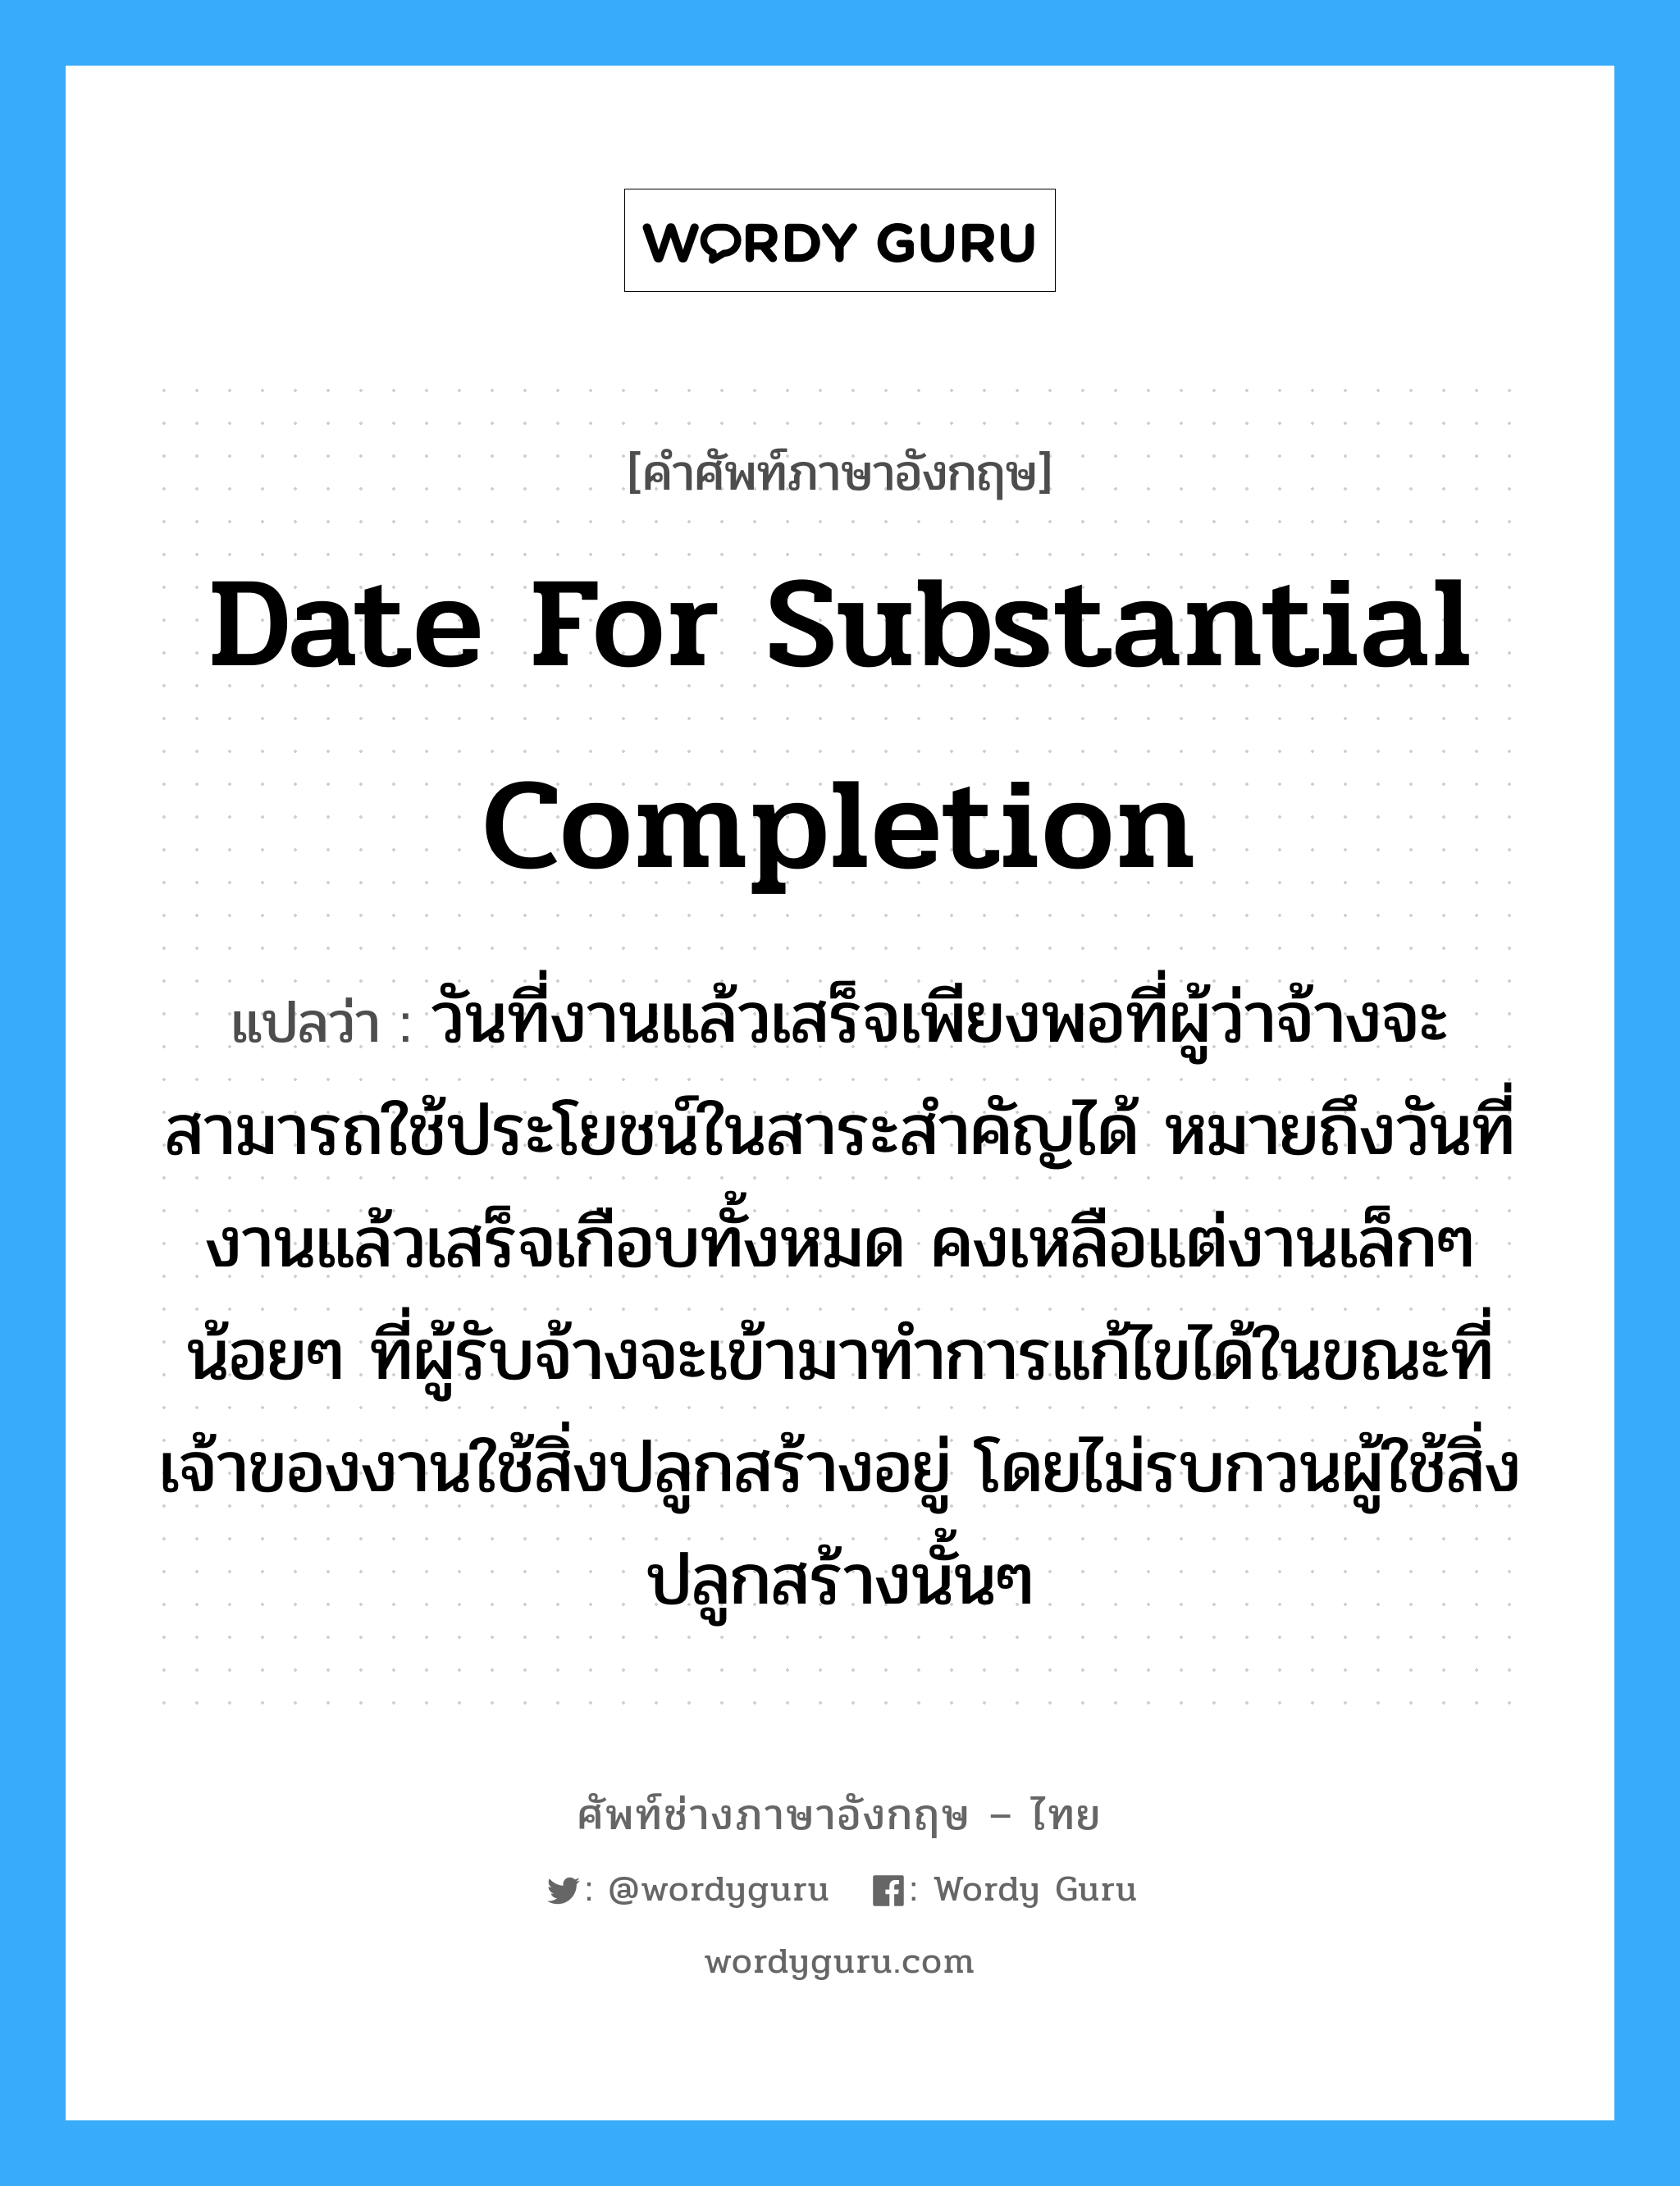 Date for Substantial Completion แปลว่า?, คำศัพท์ช่างภาษาอังกฤษ - ไทย Date for Substantial Completion คำศัพท์ภาษาอังกฤษ Date for Substantial Completion แปลว่า วันที่งานแล้วเสร็จเพียงพอที่ผู้ว่าจ้างจะสามารถใช้ประโยชน์ในสาระสำคัญได้ หมายถึงวันที่งานแล้วเสร็จเกือบทั้งหมด คงเหลือแต่งานเล็กๆน้อยๆ ที่ผู้รับจ้างจะเข้ามาทำการแก้ไขได้ในขณะที่เจ้าของงานใช้สิ่งปลูกสร้างอยู่ โดยไม่รบกวนผู้ใช้สิ่งปลูกสร้างนั้นๆ